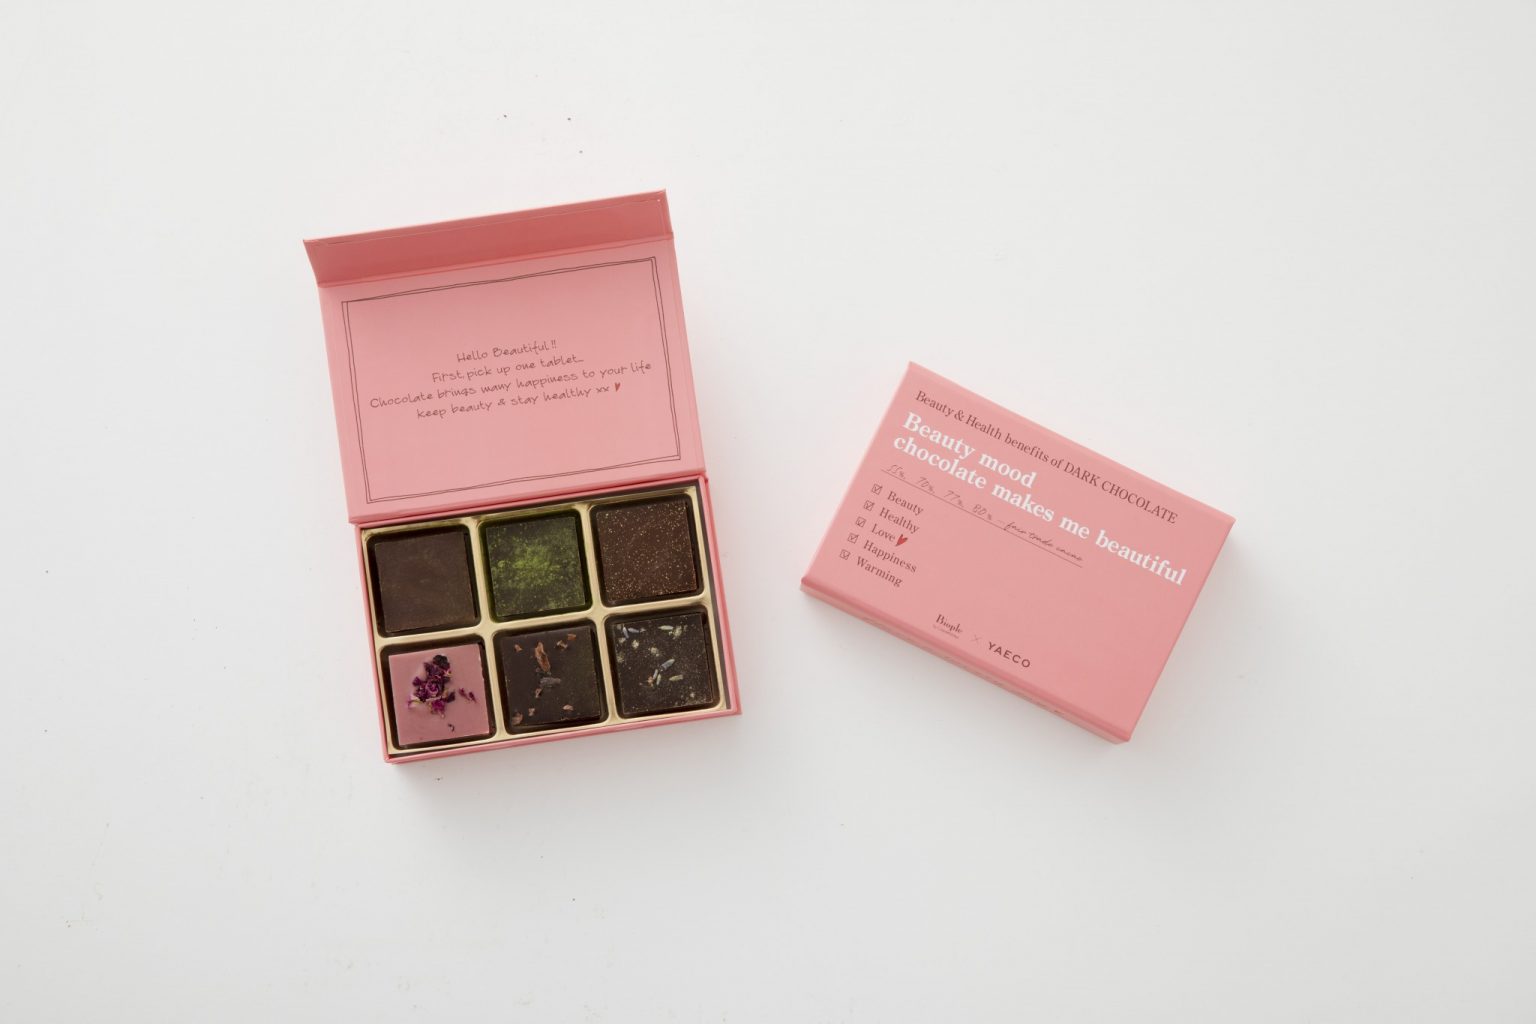 〈YAECOコラボレーション チョコレート〉の「Beauty mood〜chocolate makes me beautiful〜」全18枚 3,700円。Biople by CosmeKitchen 全国18店舗（販売は〜2月14日）（■03-5774-5565）